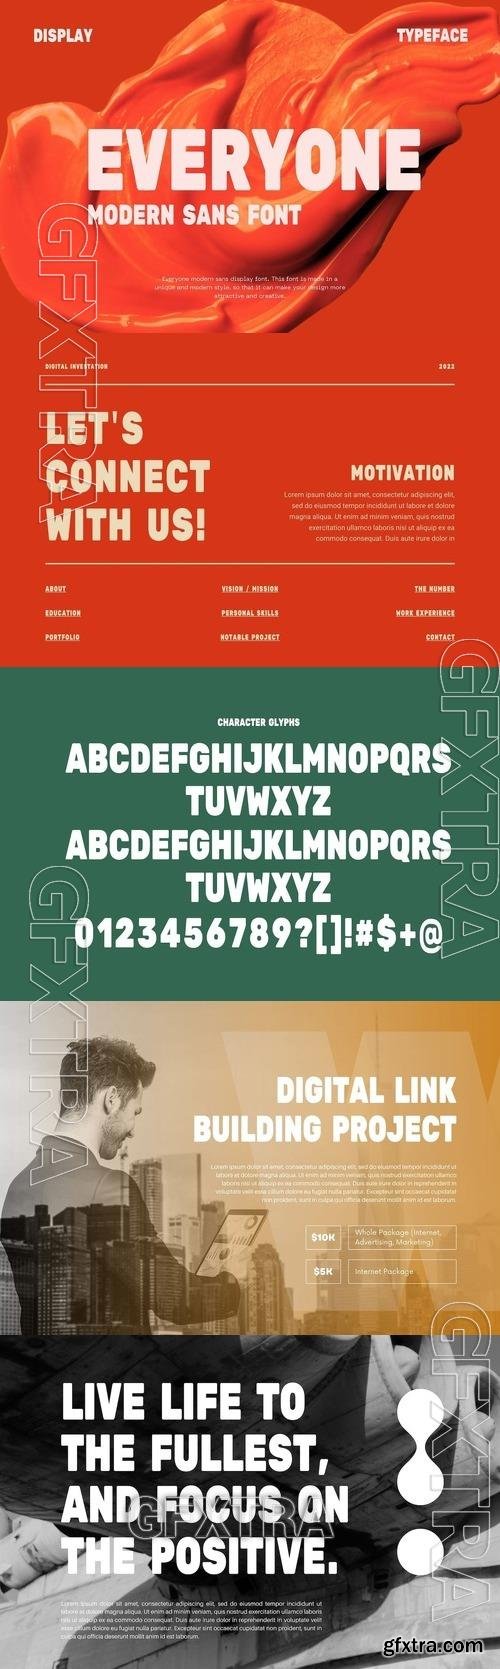 Everyone - Modern Sans Font F424H8C